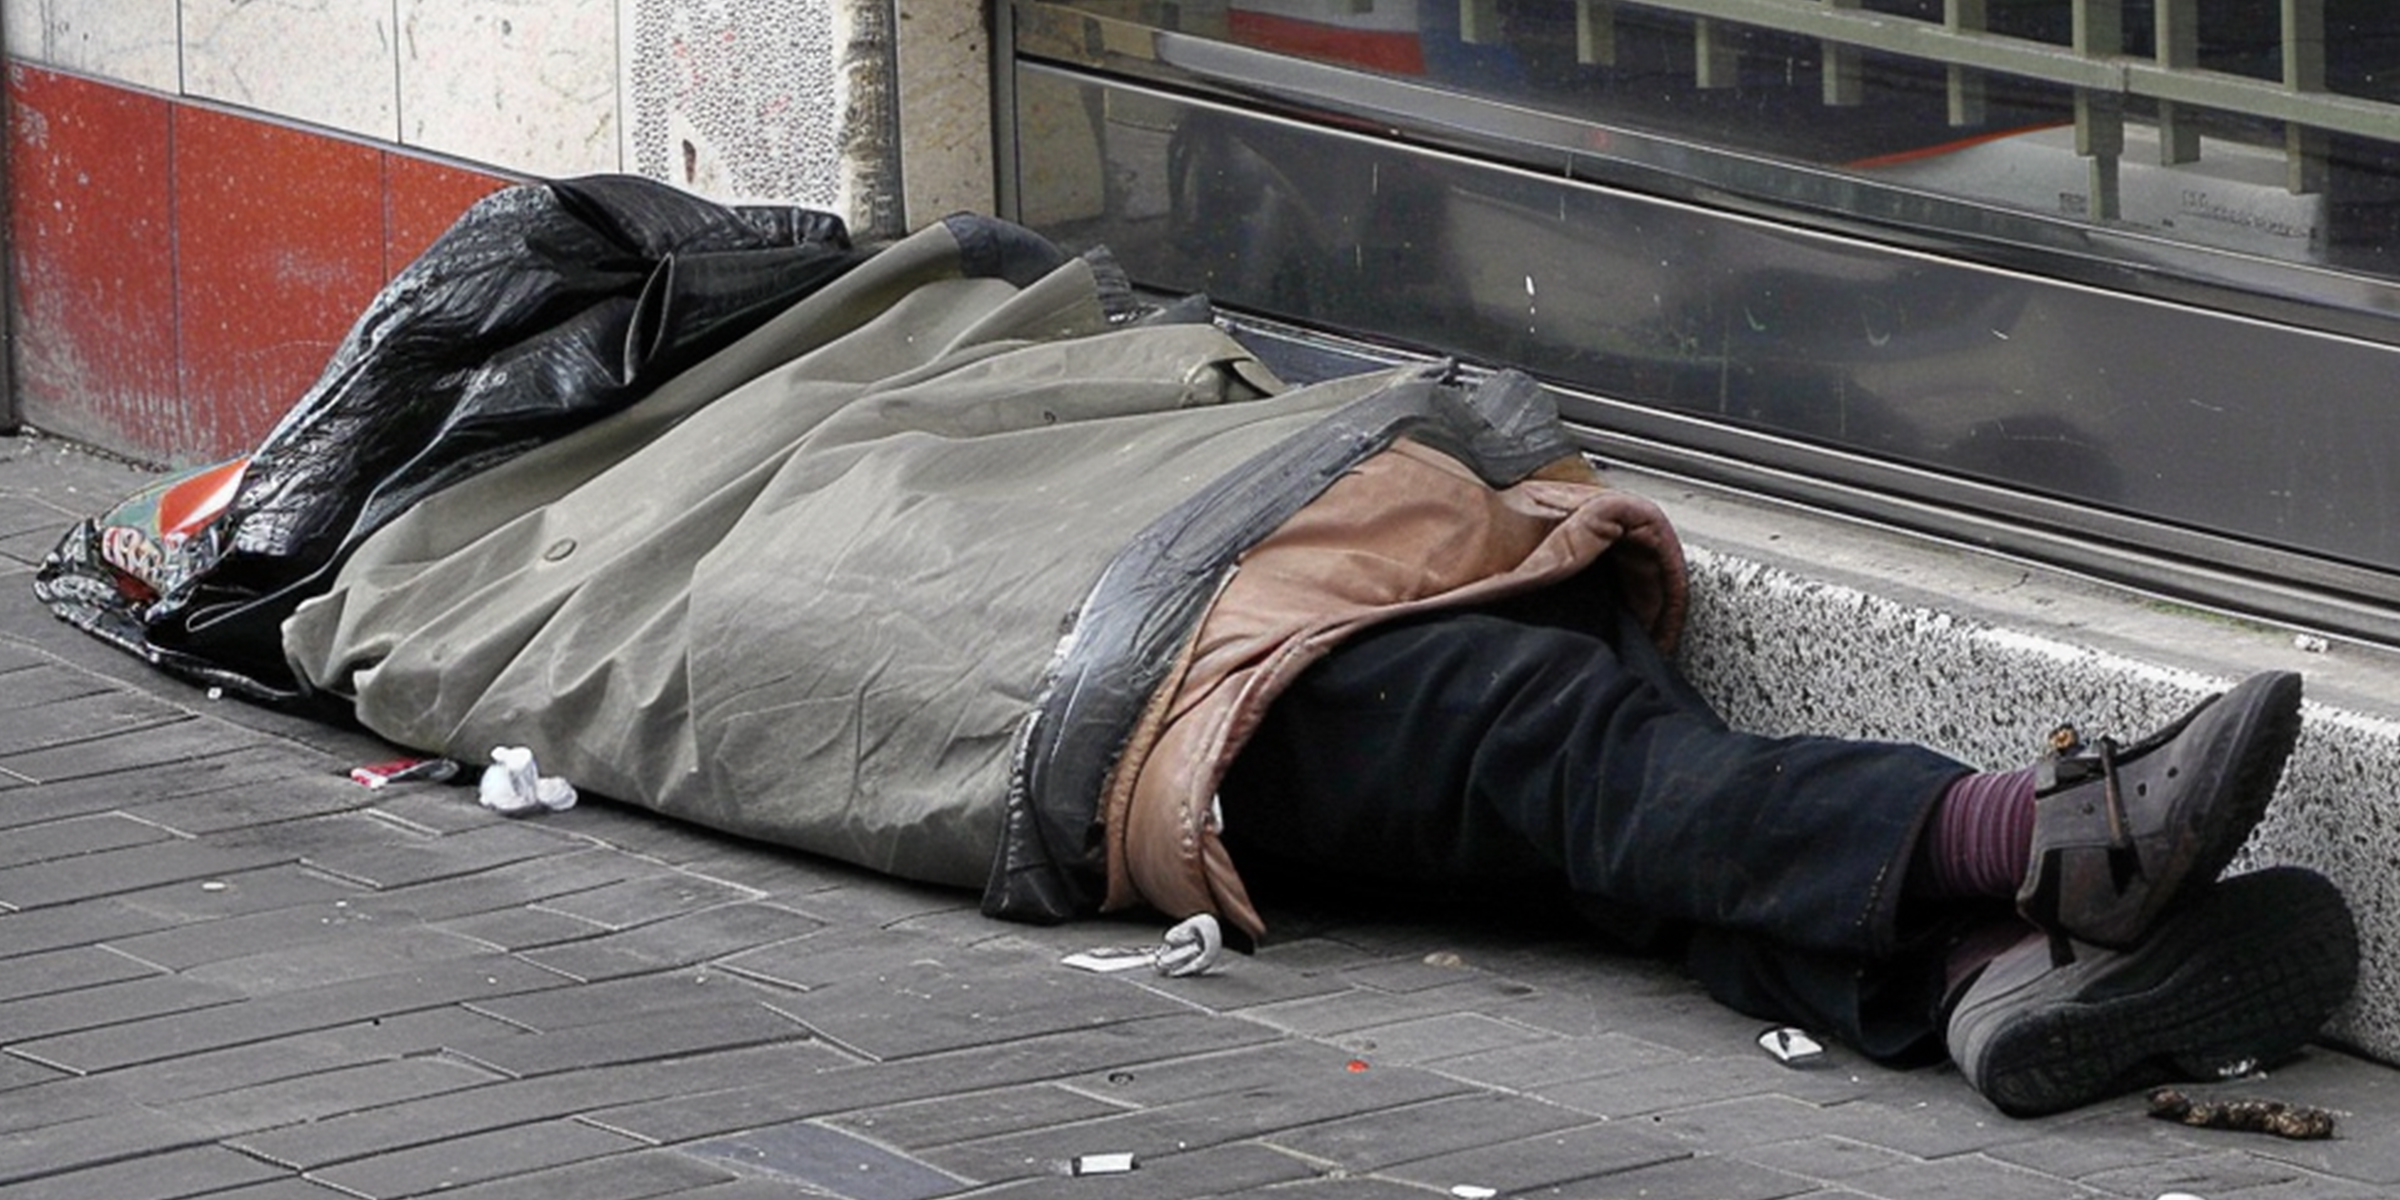 A homeless man sleeping on the sidewalk | Source: Amomama